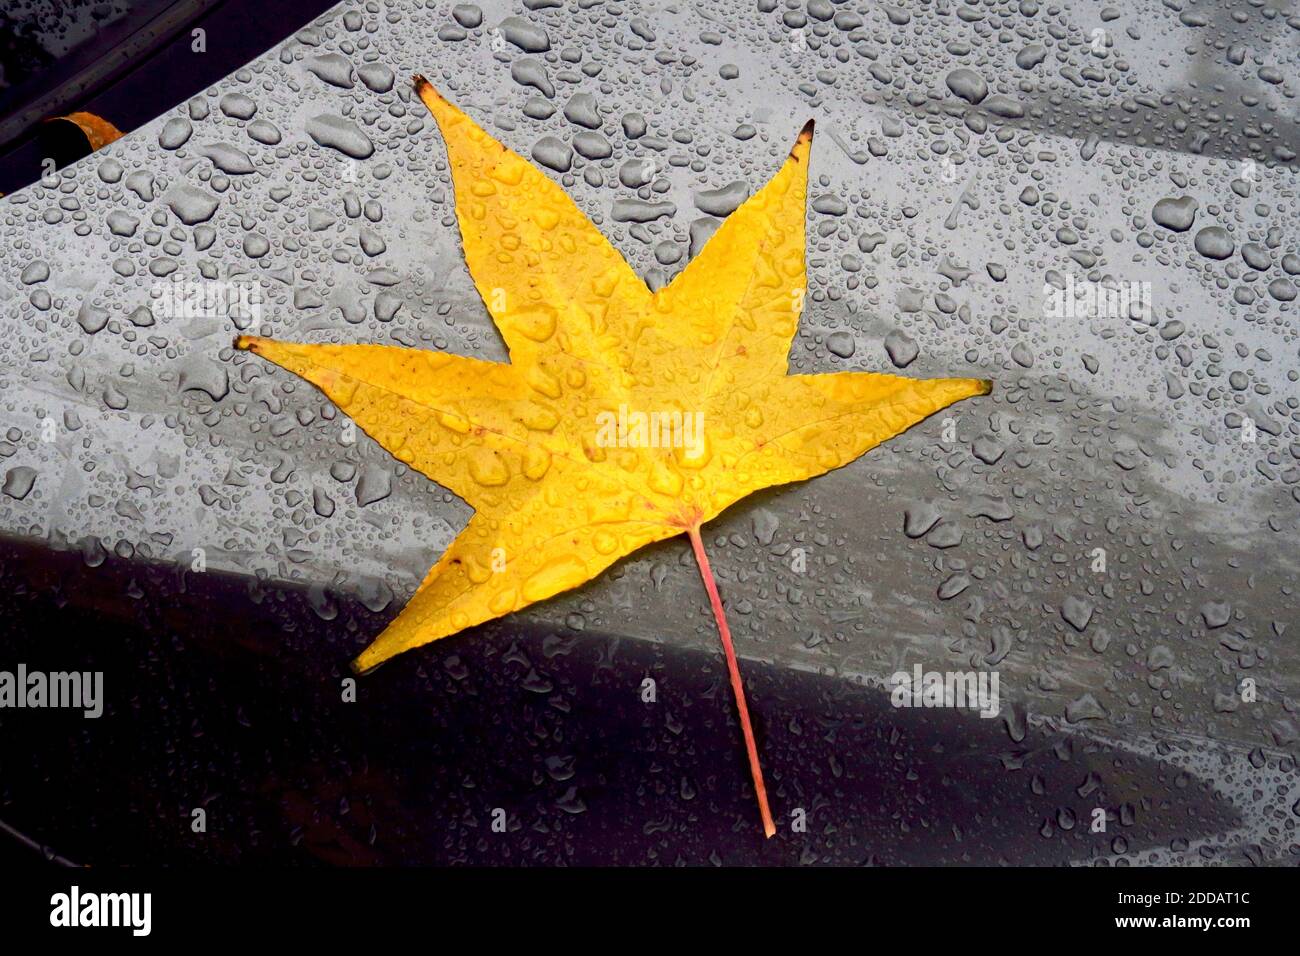 Yellow American sweetgum (Liquidambar styraciflua) leaf lying on car hood covered in raindrops Stock Photo